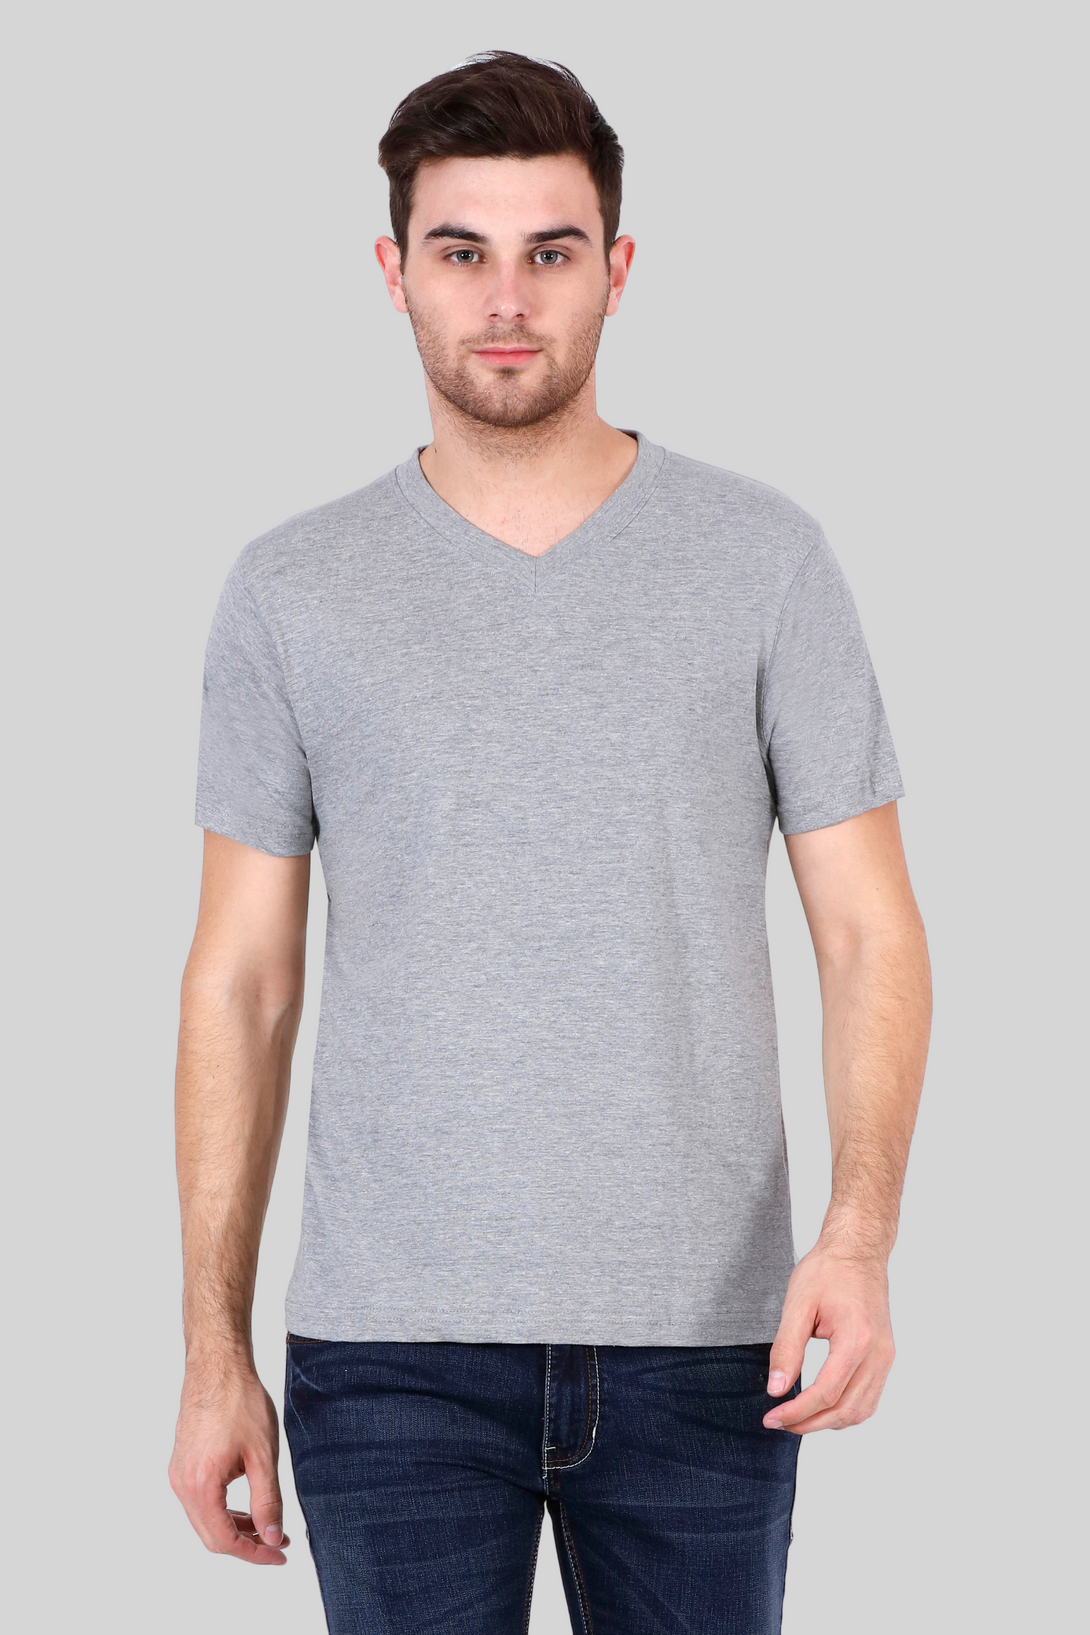 Grey Melange V Neck T-Shirt For Men - WowWaves - 1